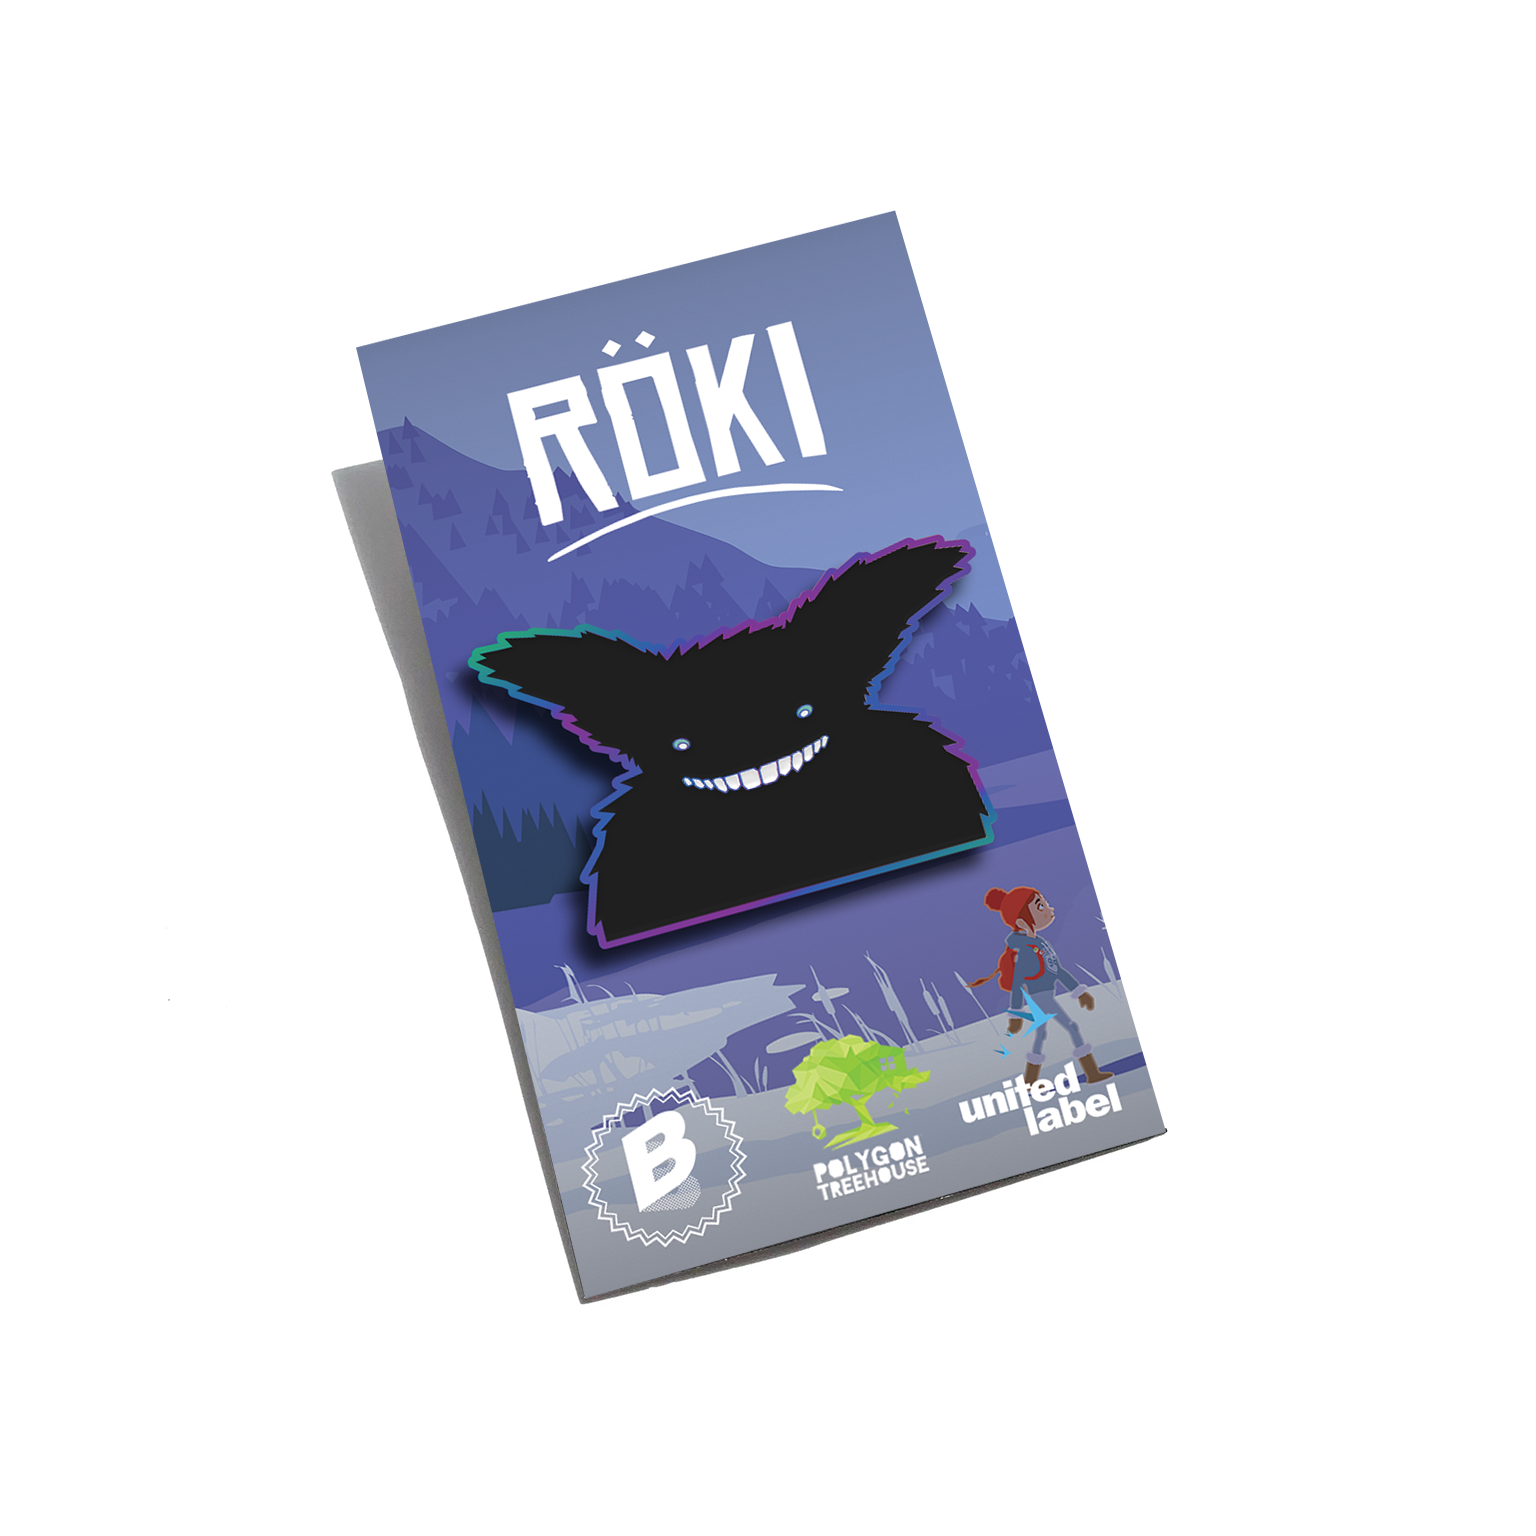 Röki (Original Soundtrack)